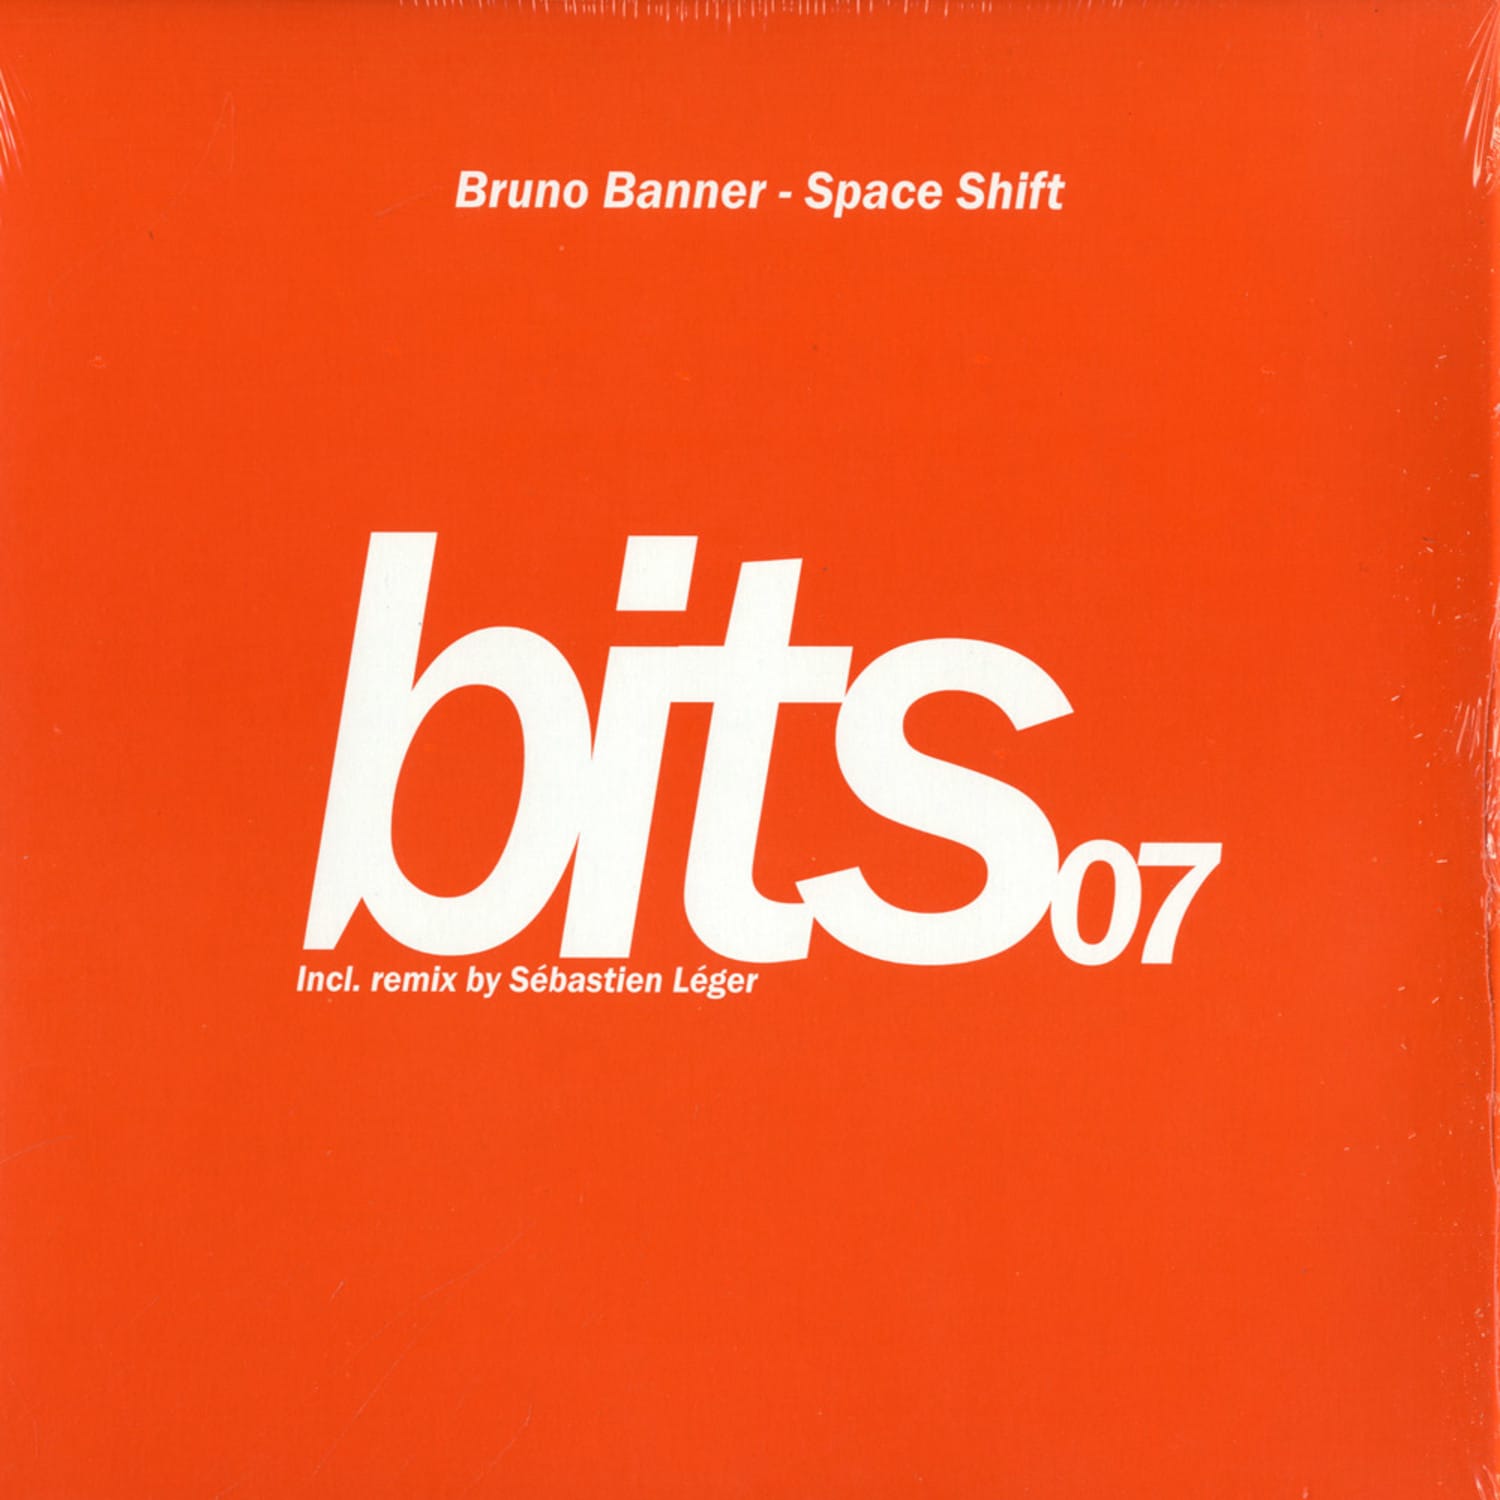 Bruno Banner - Space Shift